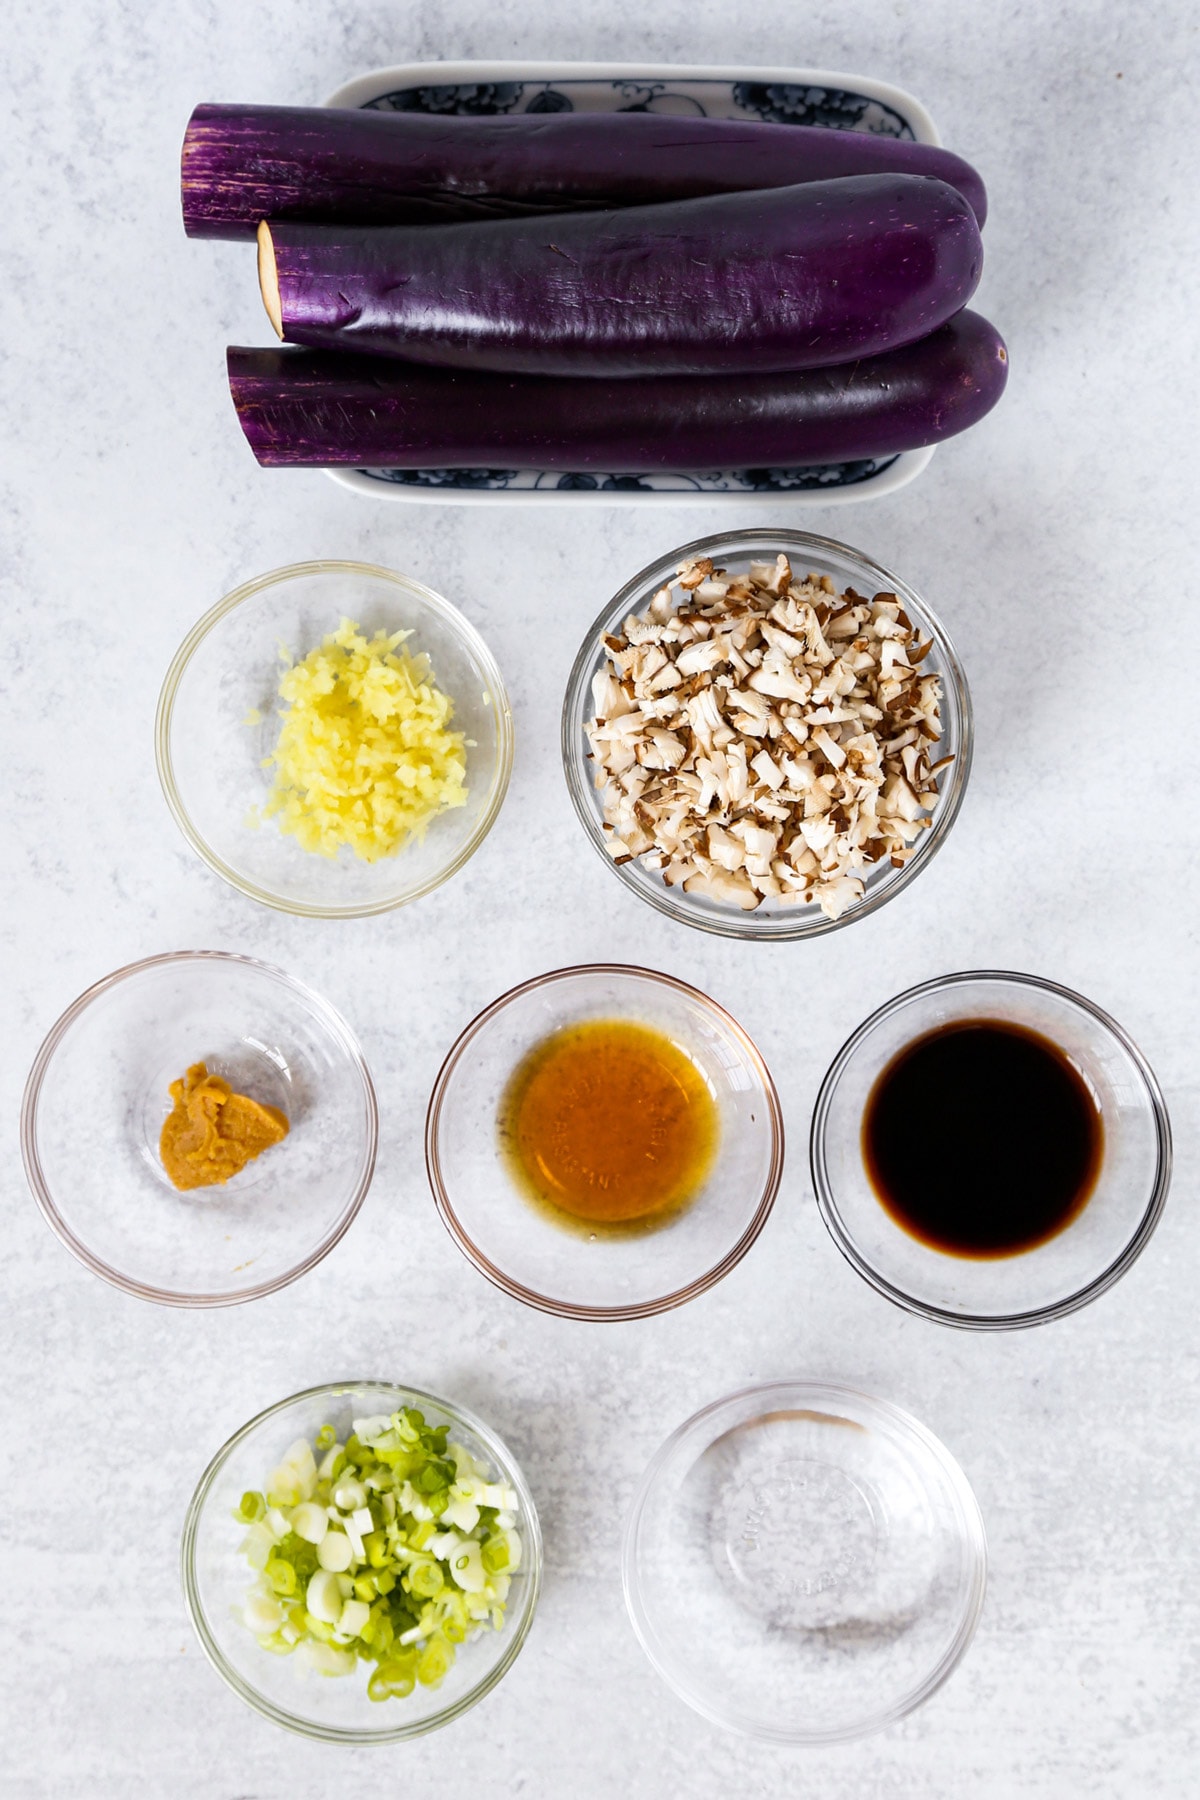 Ingredients for Japanese eggplant stir fry